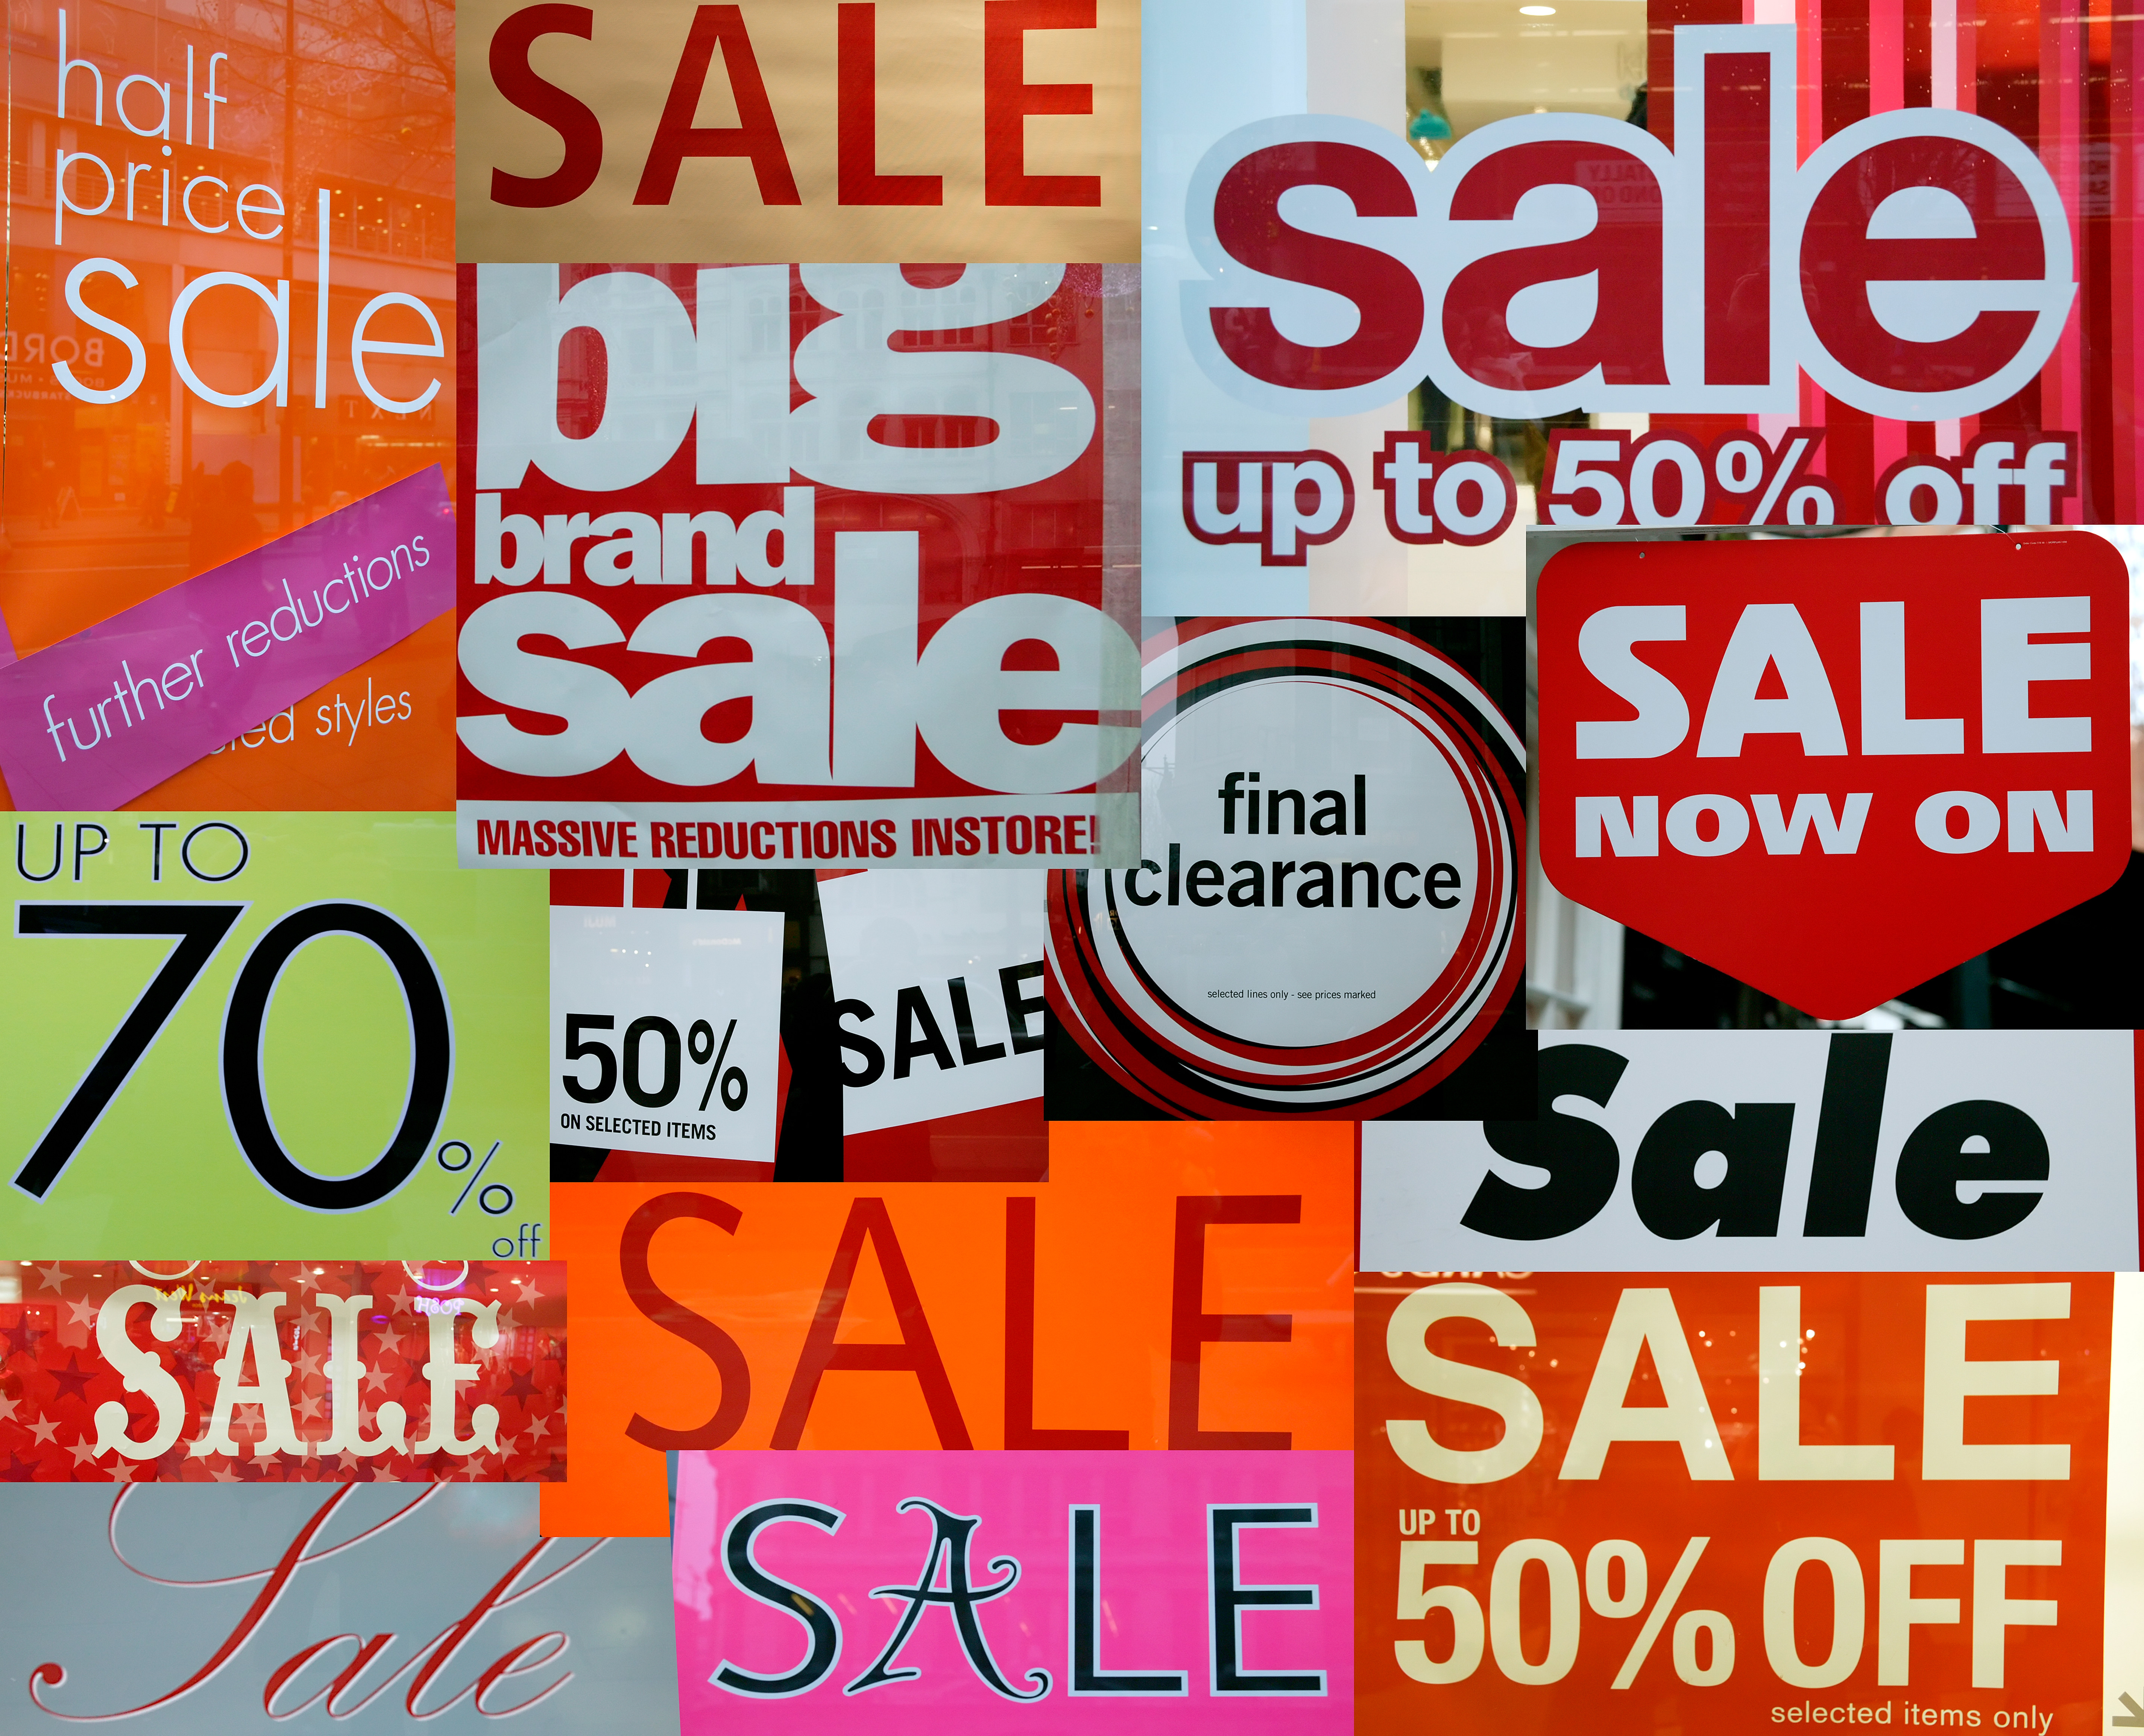 Presidents Day Sales and Deals: Macy's, Best Buy, Sleepys | Money